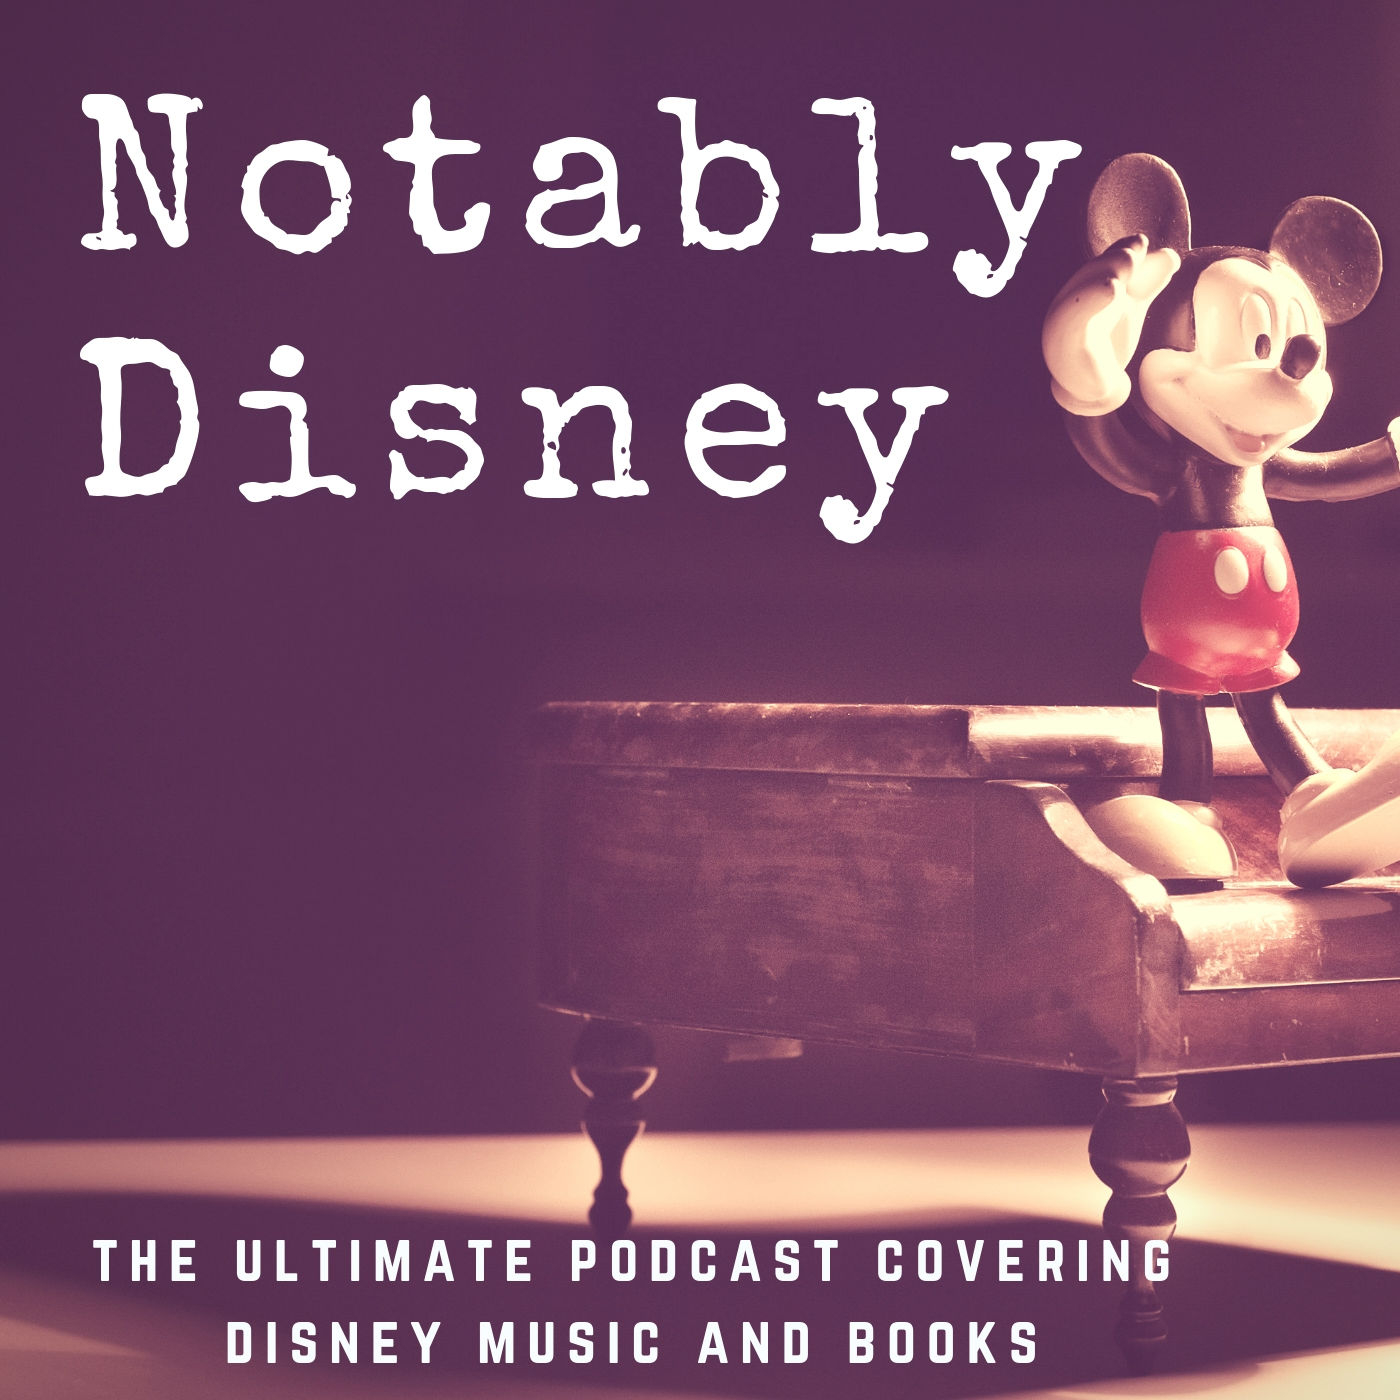 Author Foxx Nolte Explores the "Hidden History of Walt Disney World"